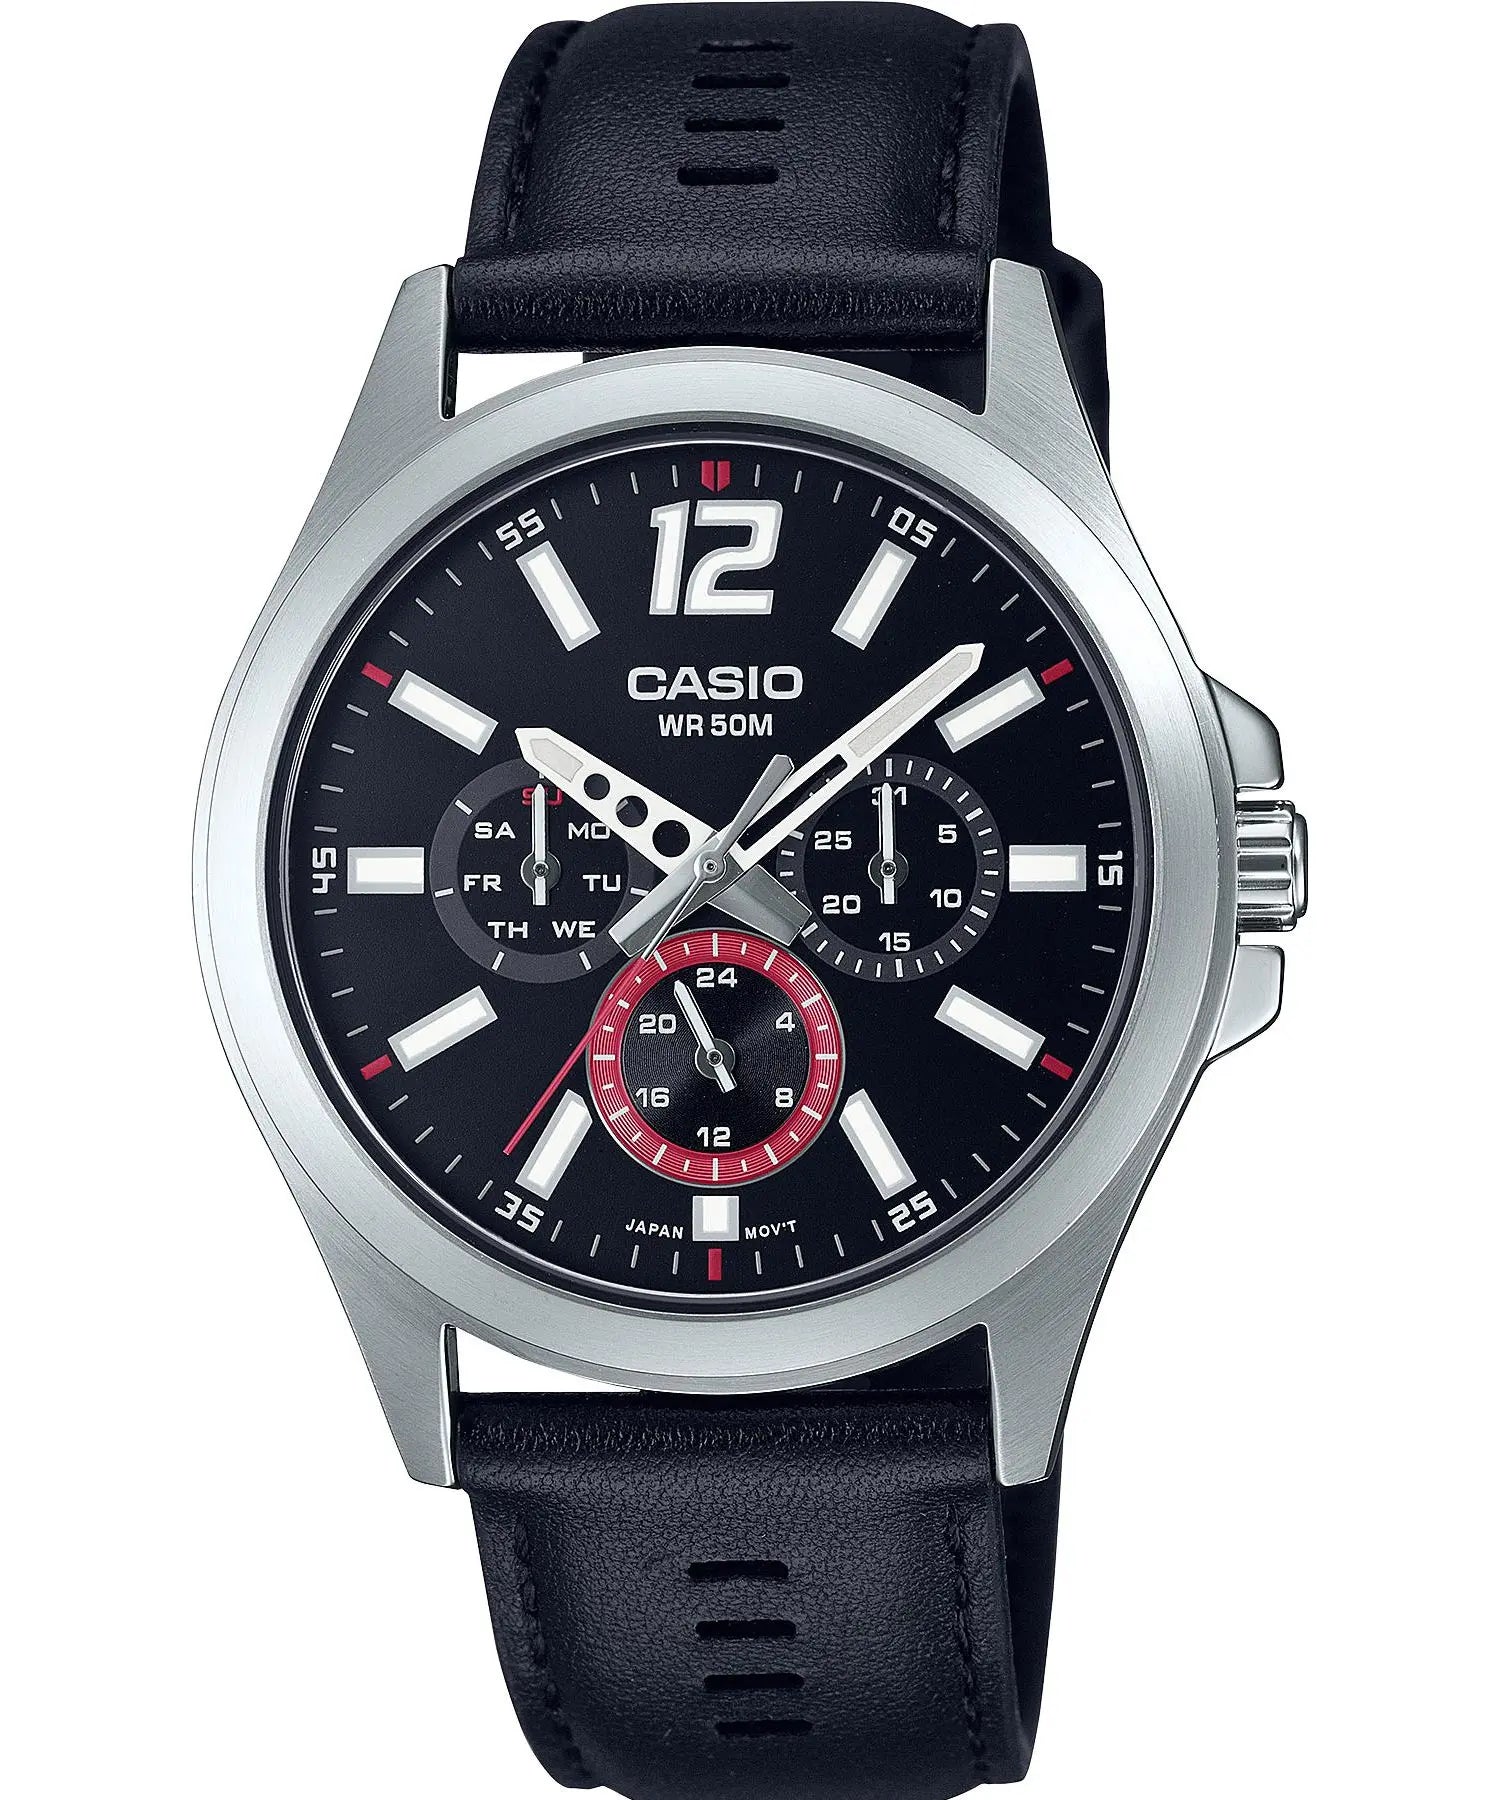 Casio General Men's Watch - MTP-E350L-1BVDF  Black Leather Band  Water-Resistant  Quartz Movement  Sleek Men's  Fashionable  Durable  Affordable  Halabh